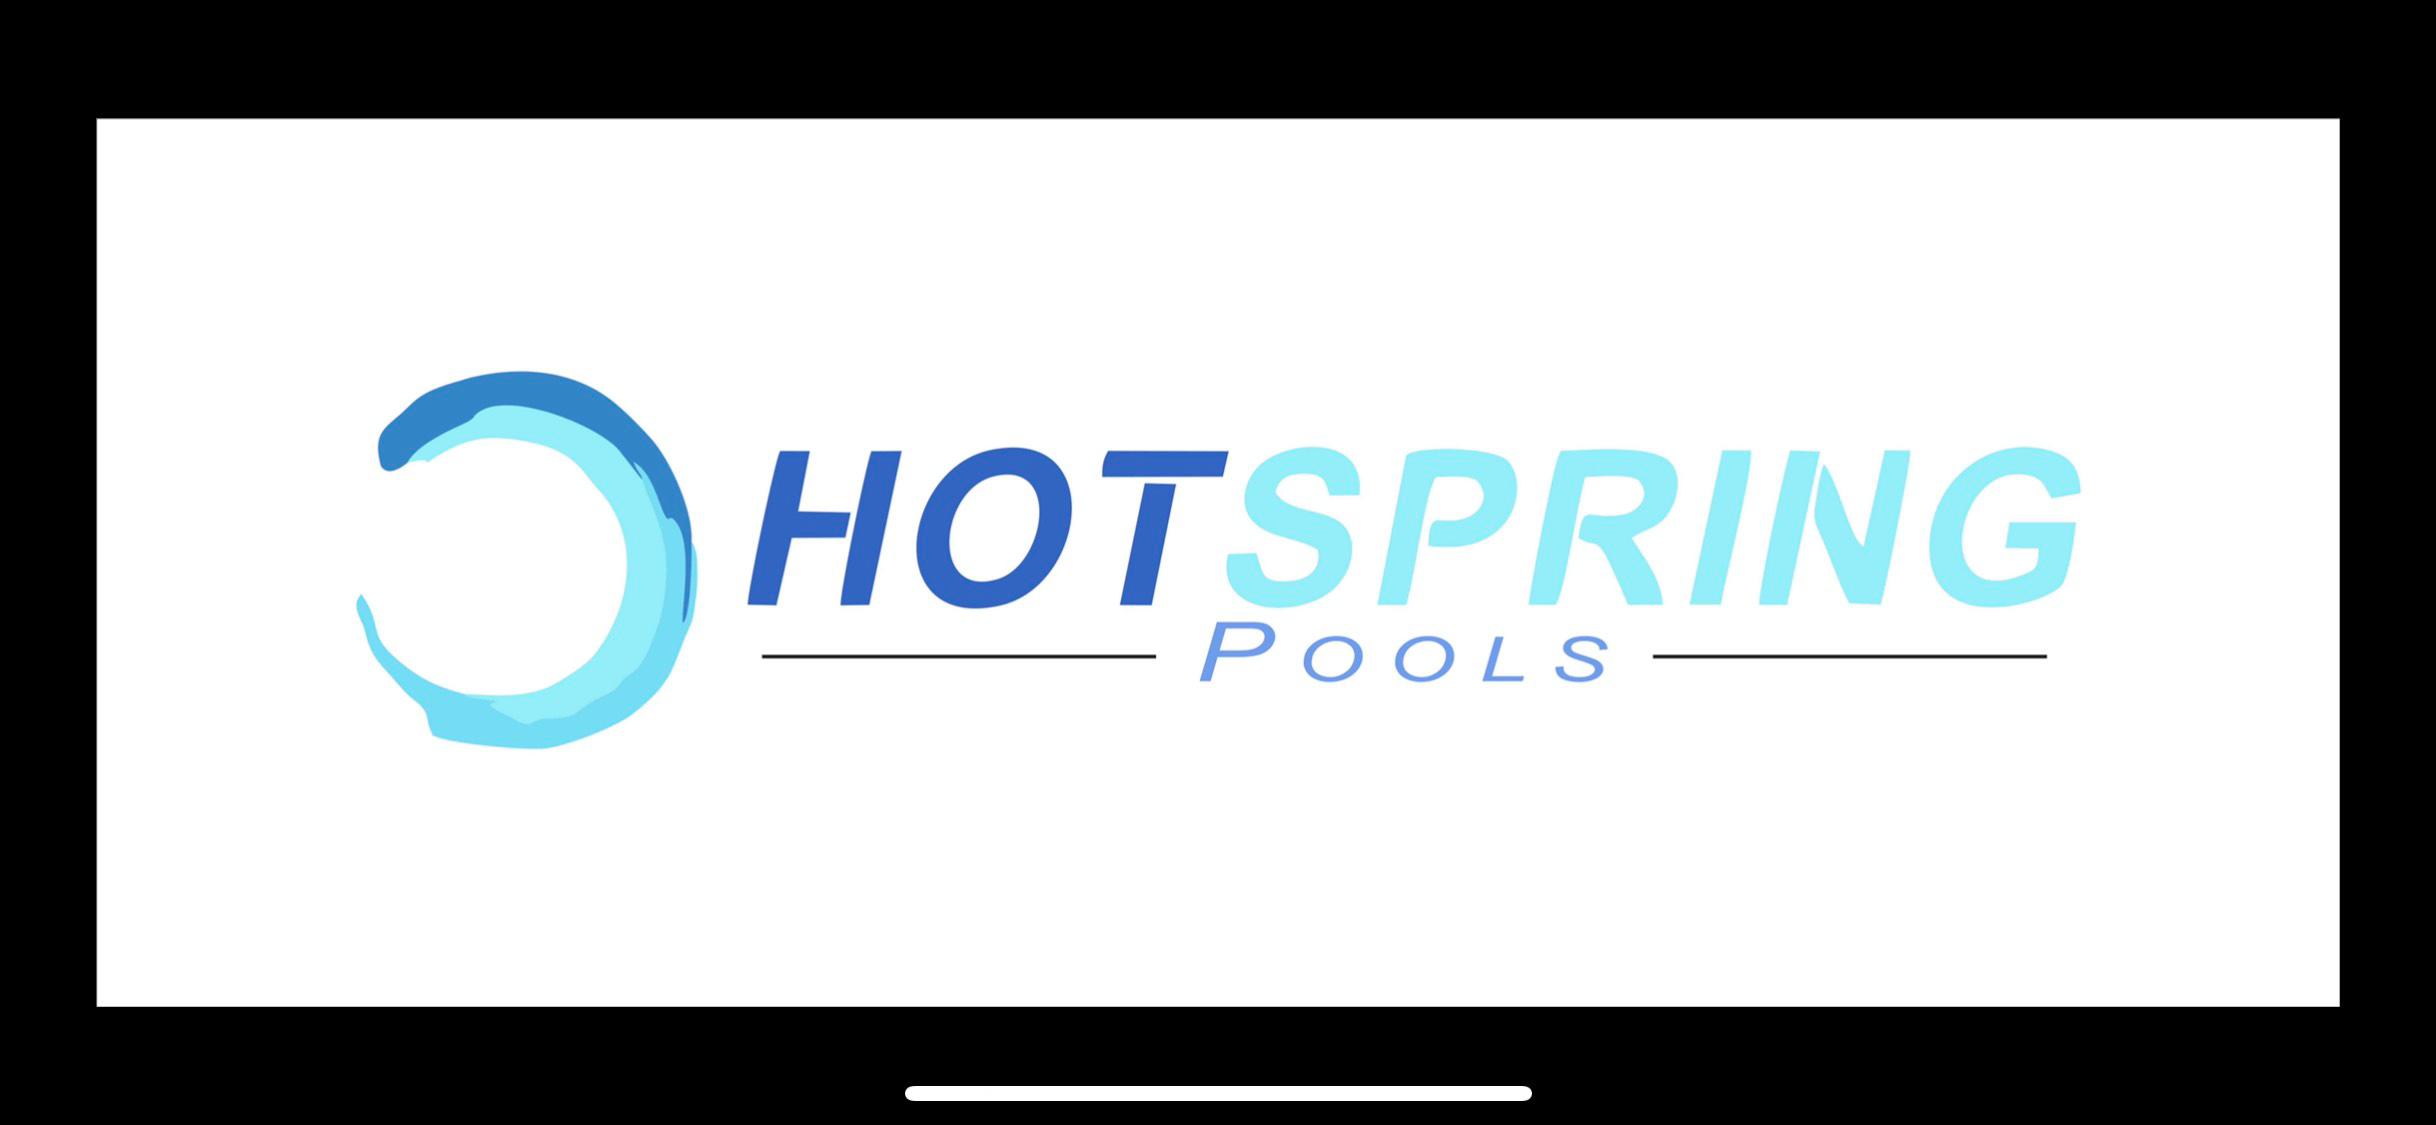 Hot Spring Pools Photo